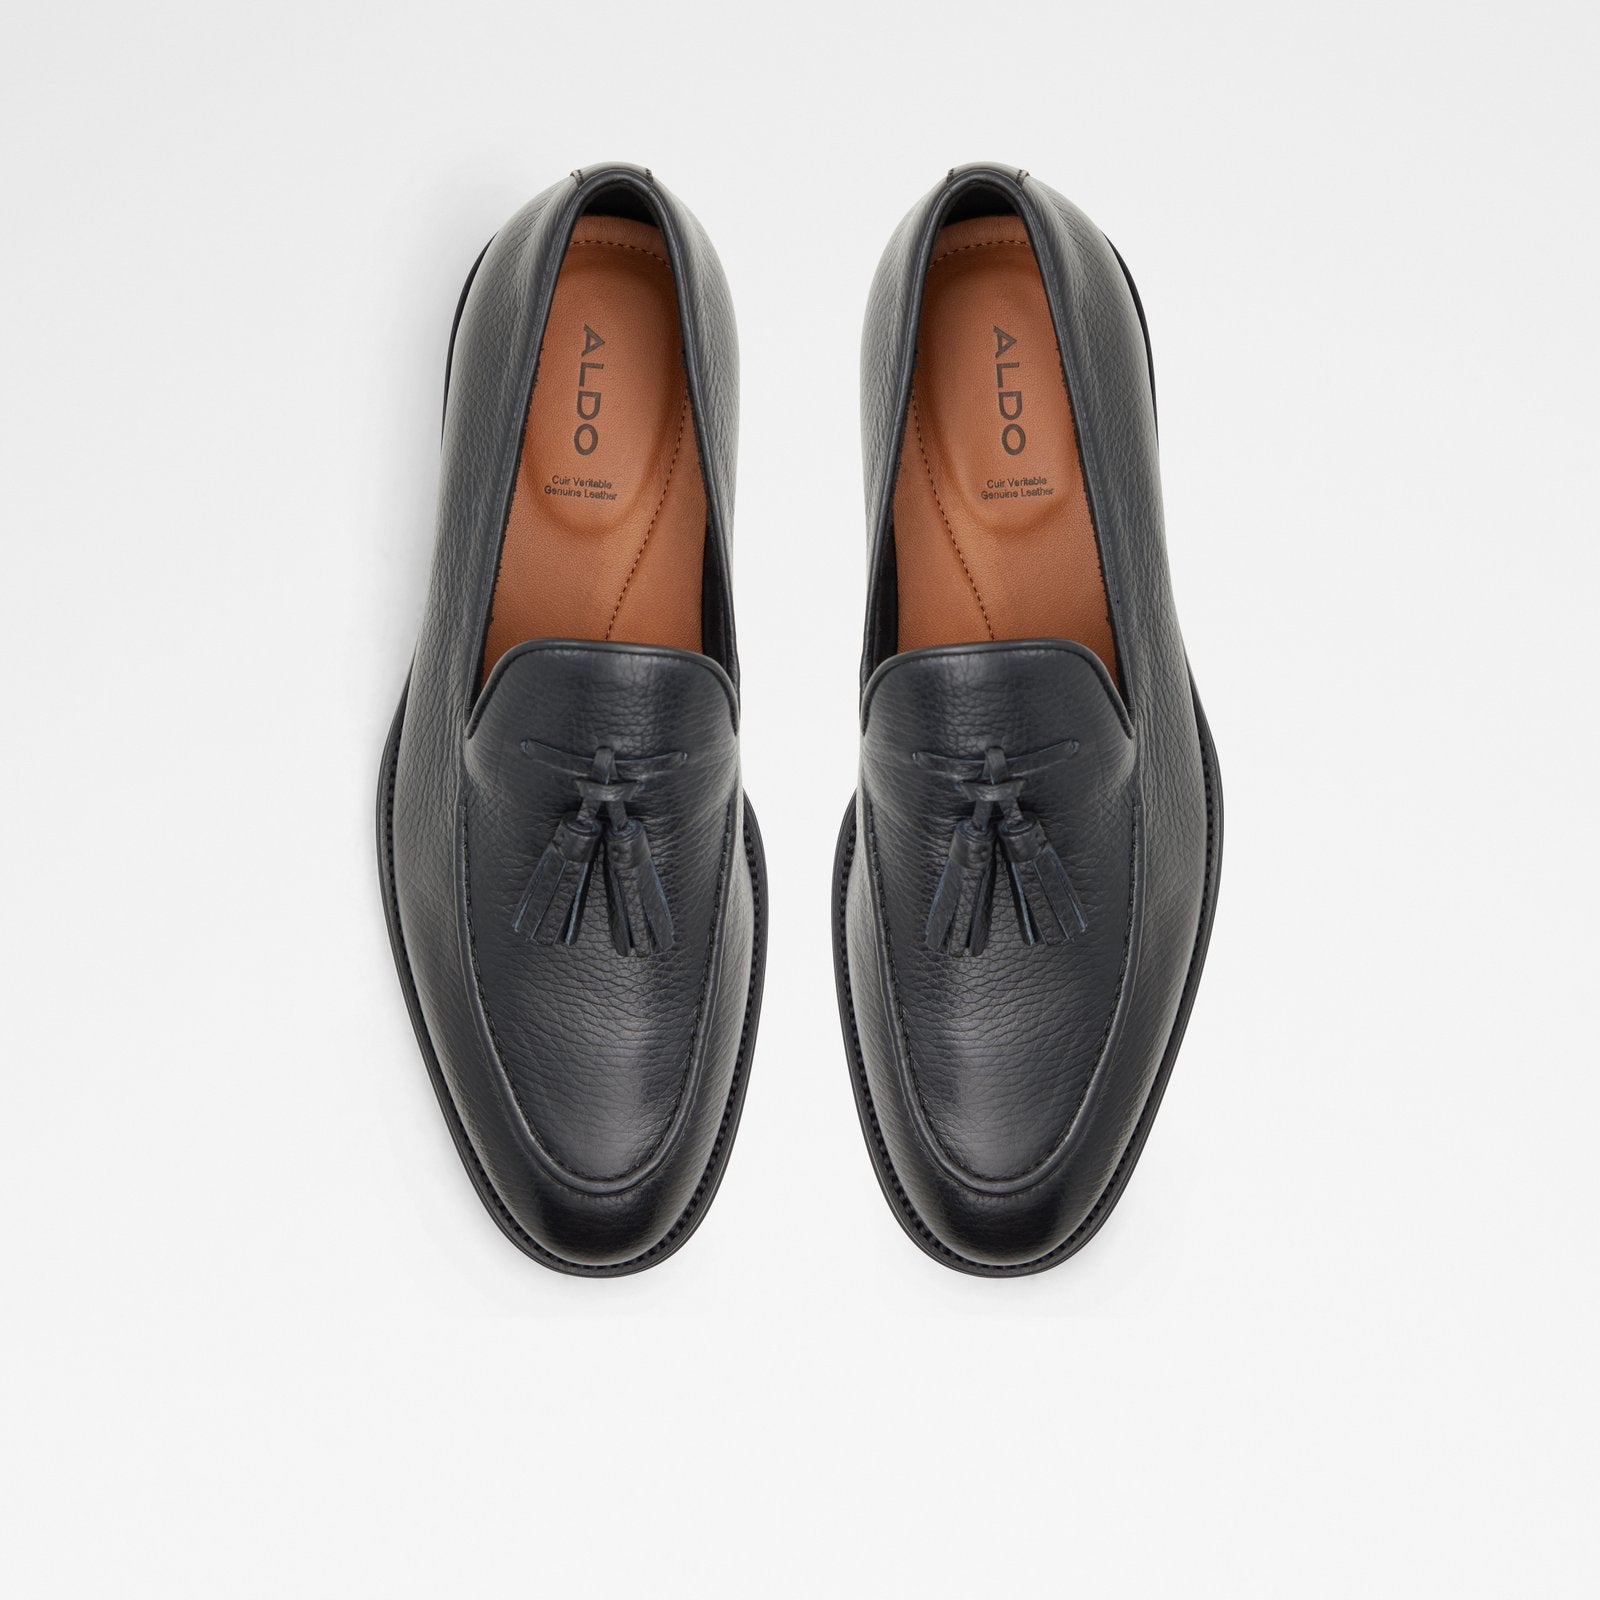 Adden Men Shoes - Black - ALDO KSA